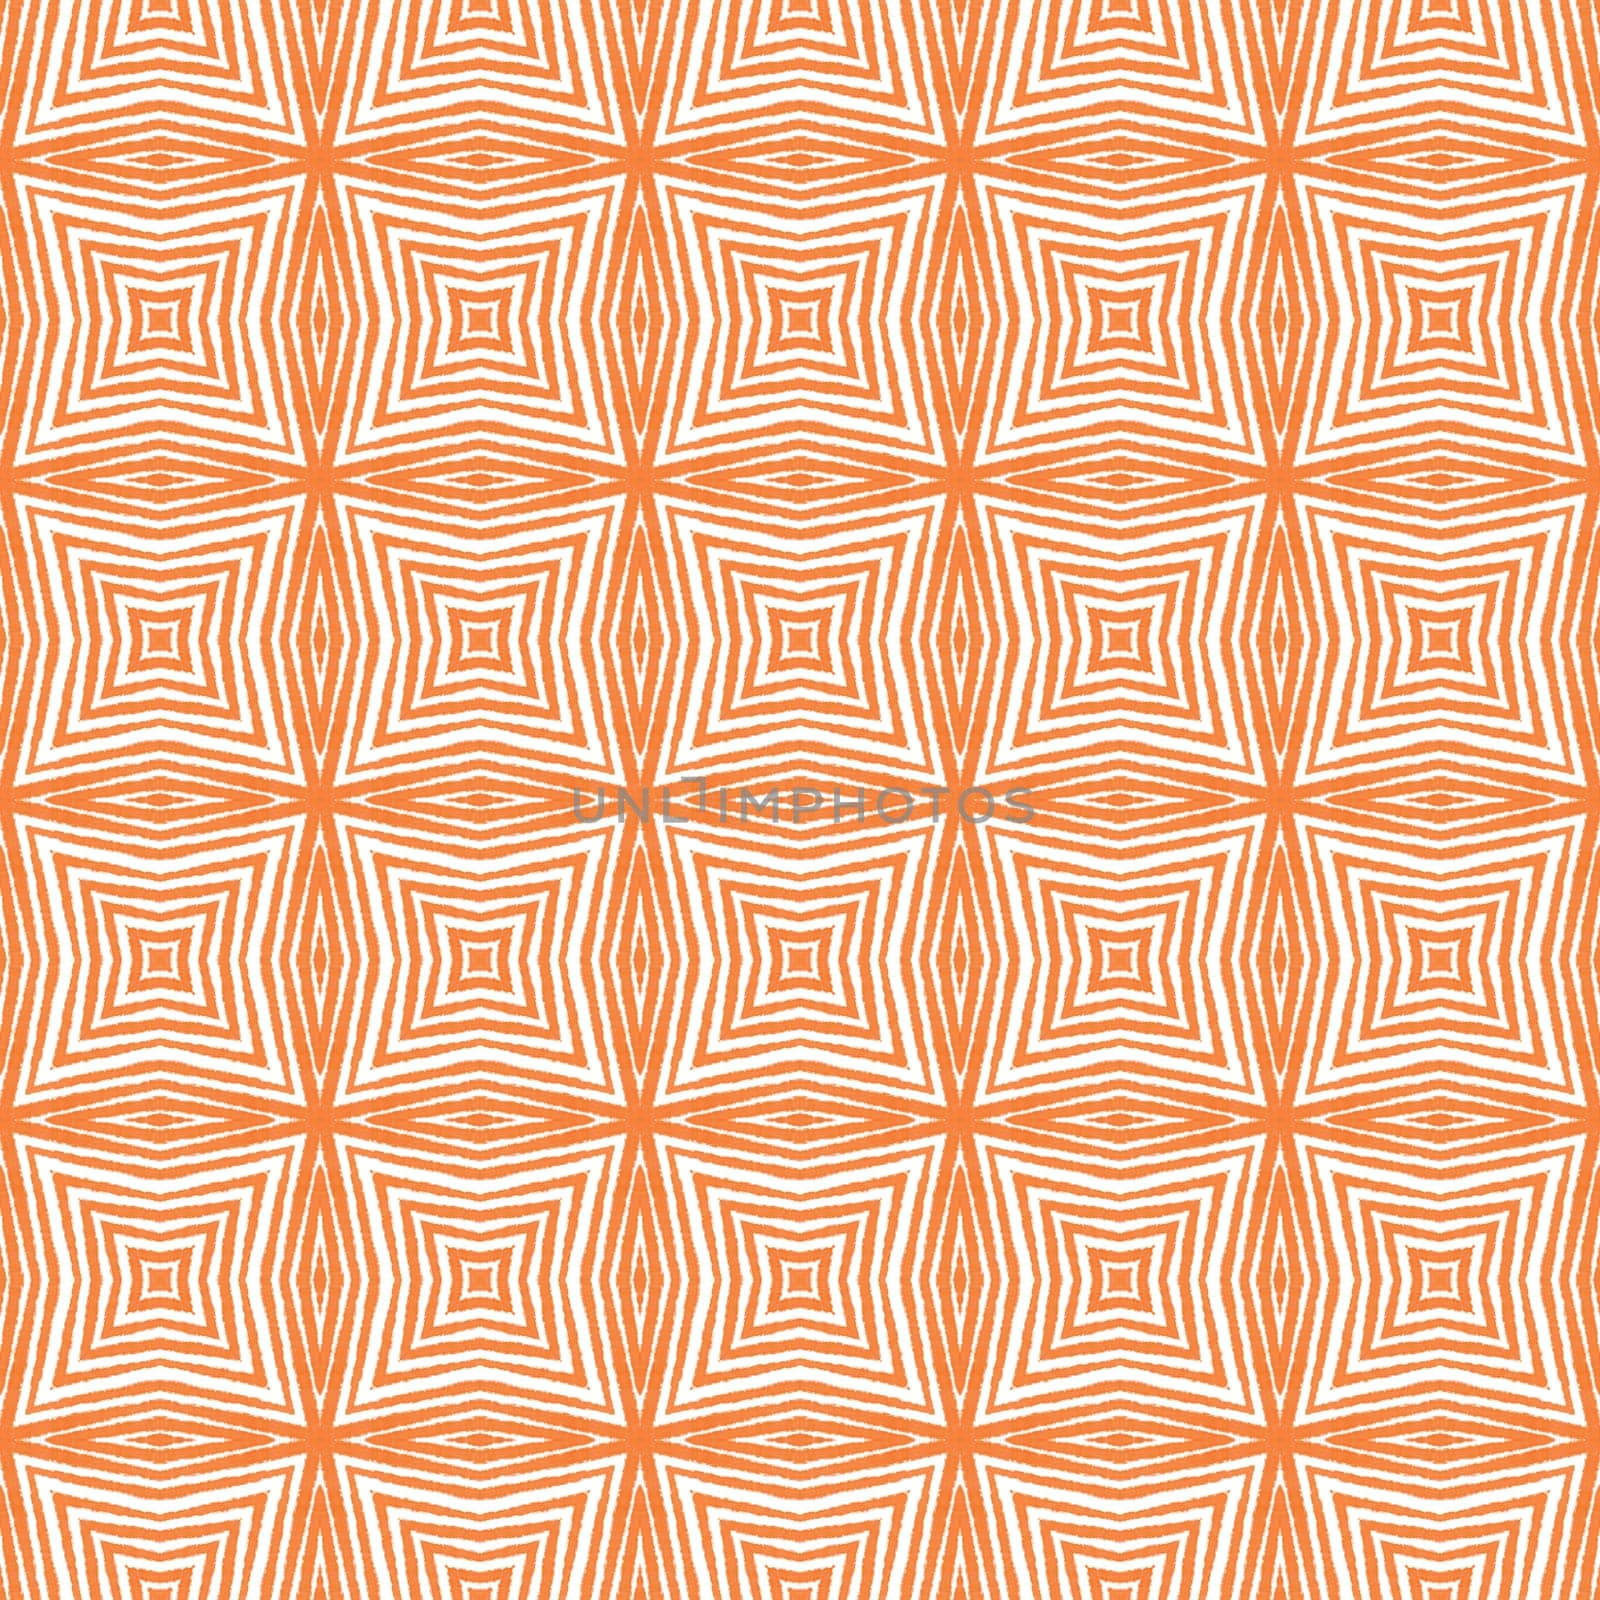 Textured stripes pattern. Orange symmetrical kaleidoscope background. Textile ready extra print, swimwear fabric, wallpaper, wrapping. Trendy textured stripes design.